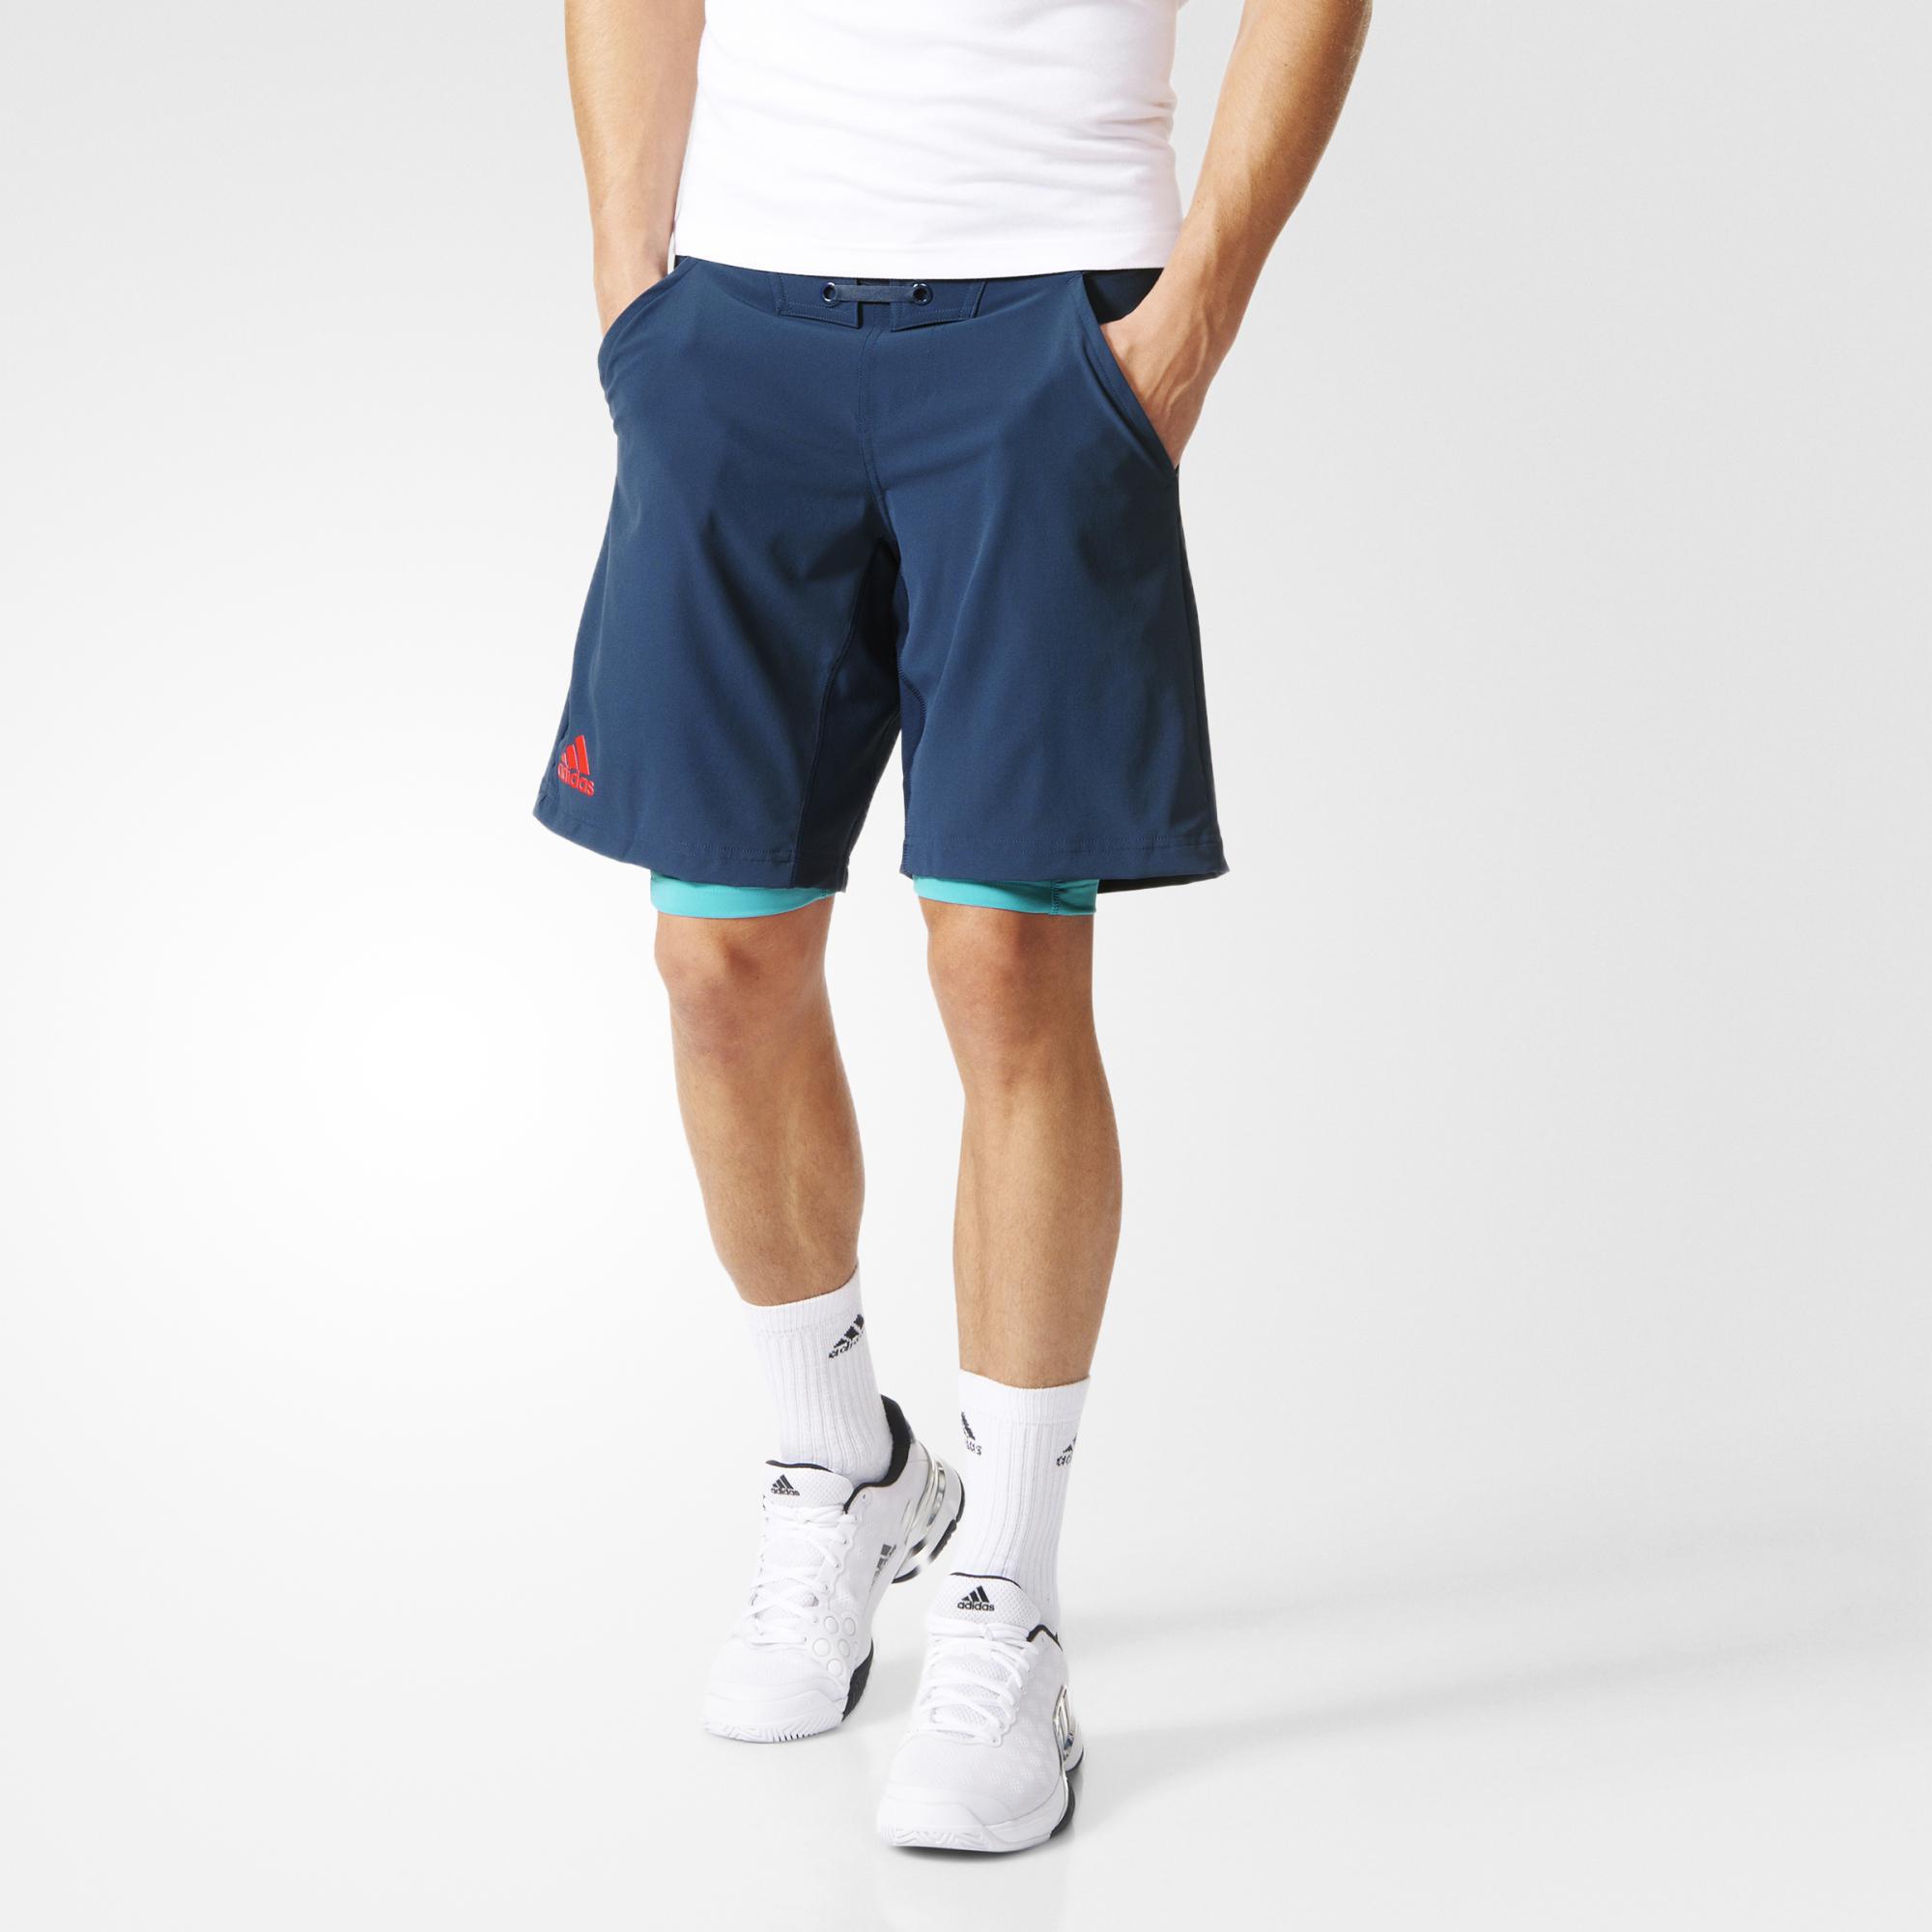 Adidas Mens Adizero Shorts - Mineral Blue - Tennisnuts.com